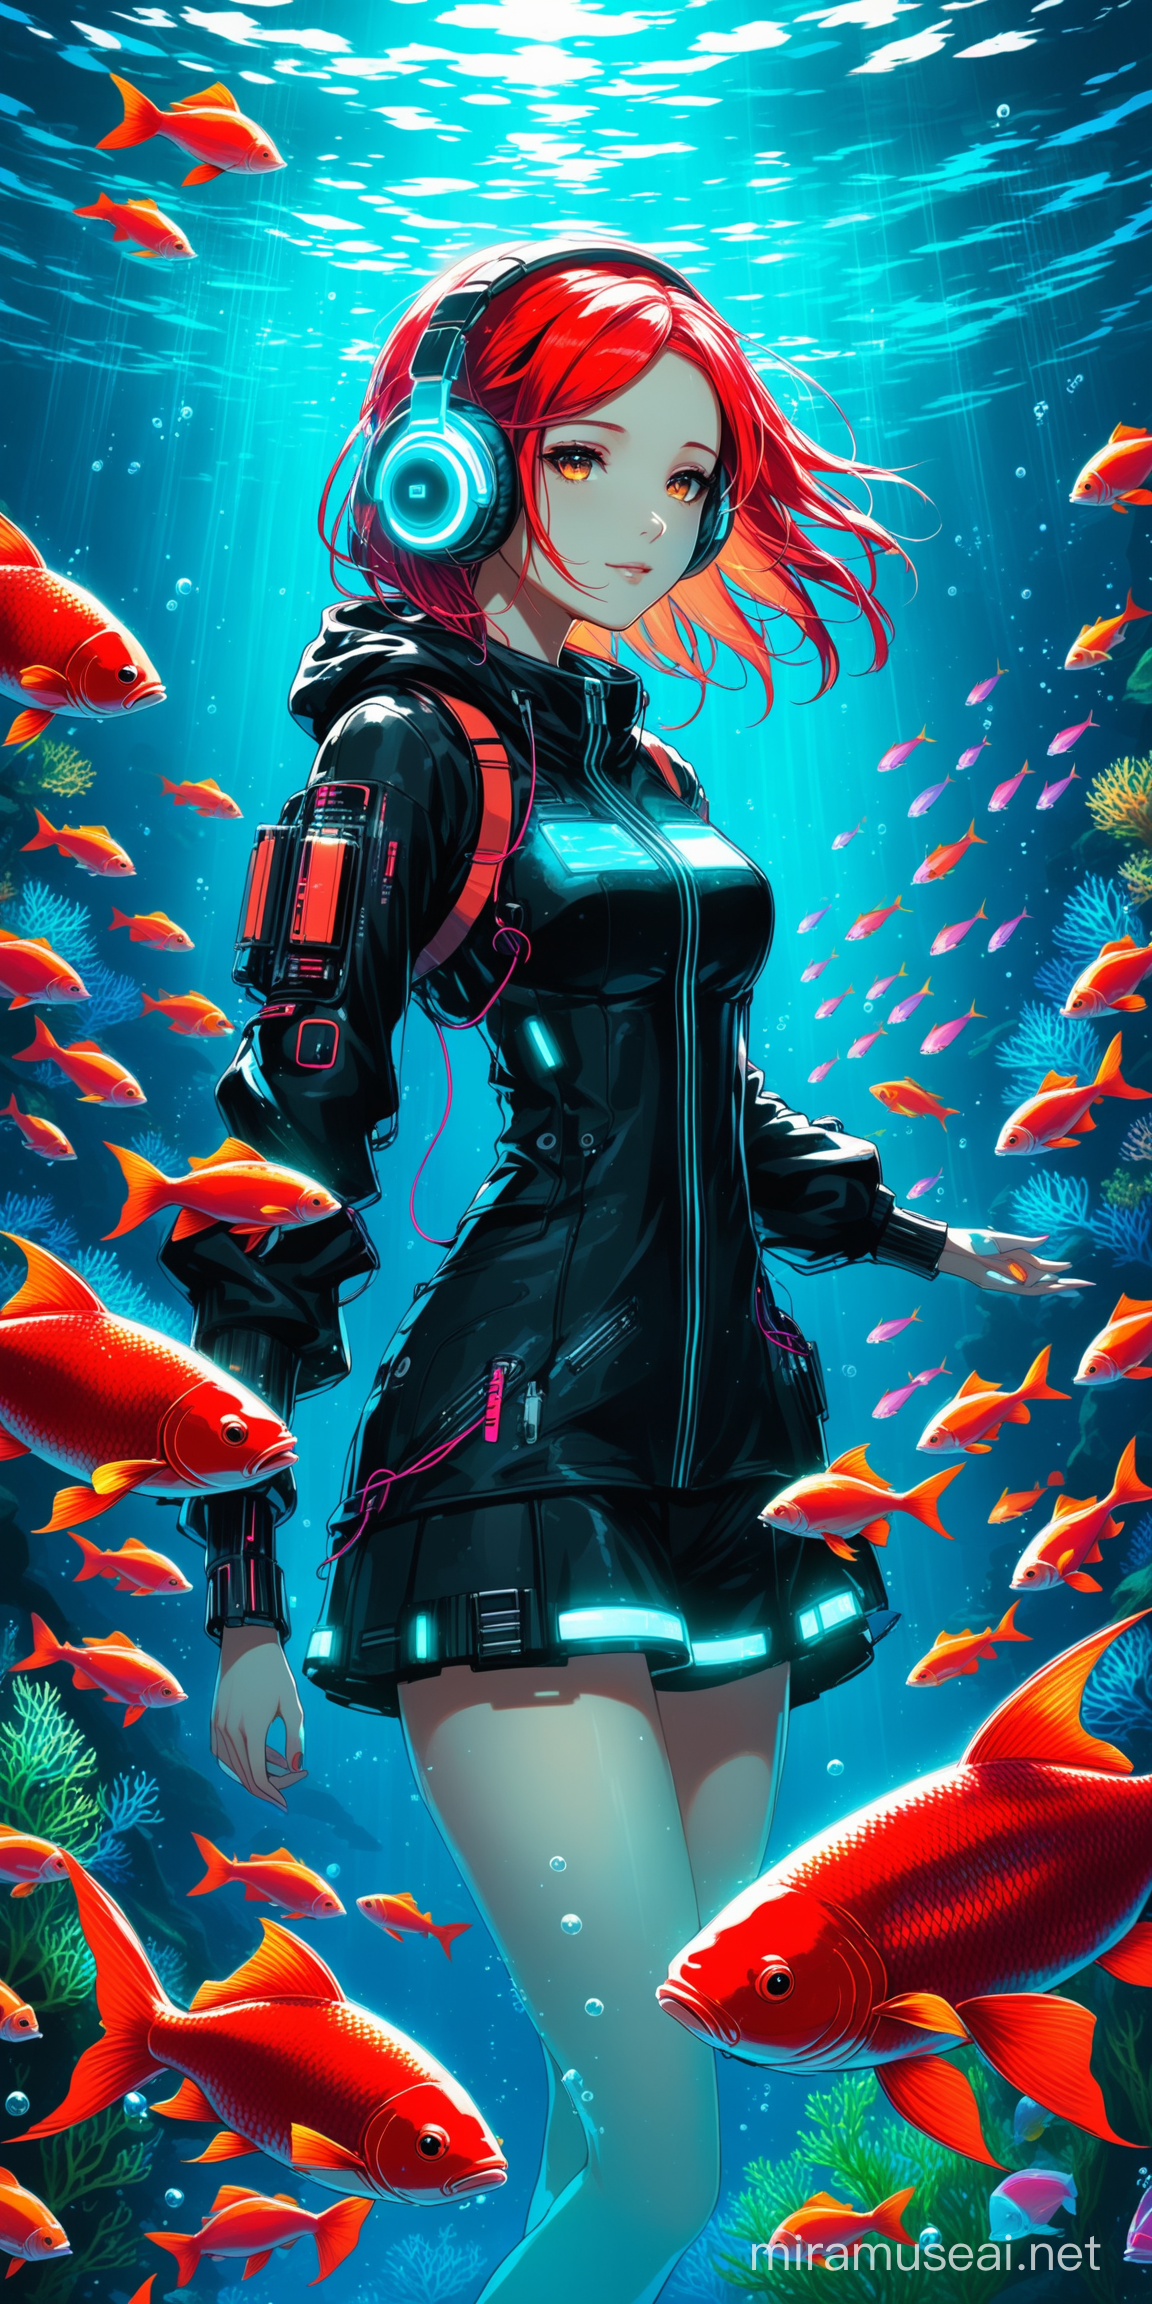 Cyberpunk Girl Enjoying Music in Bioluminescent Underwater Garden